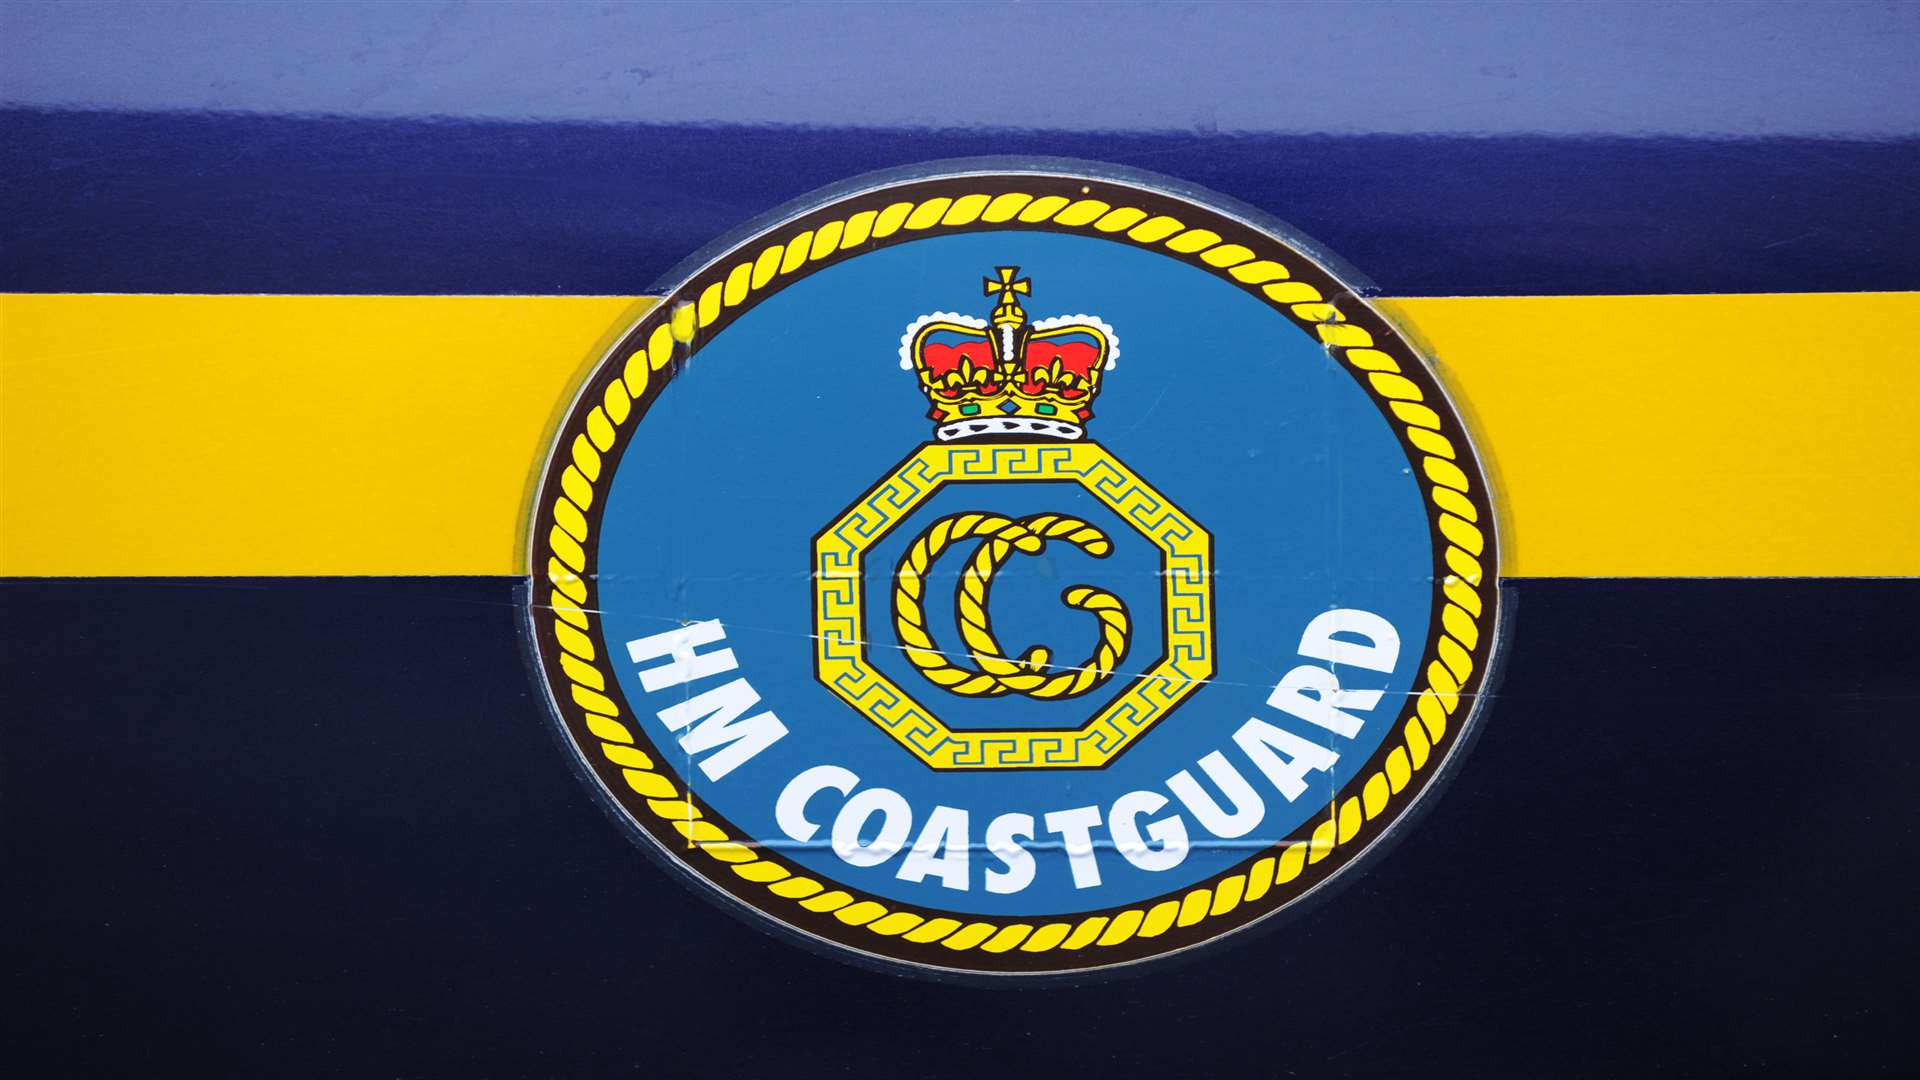 Medway Coastguard. Library image.